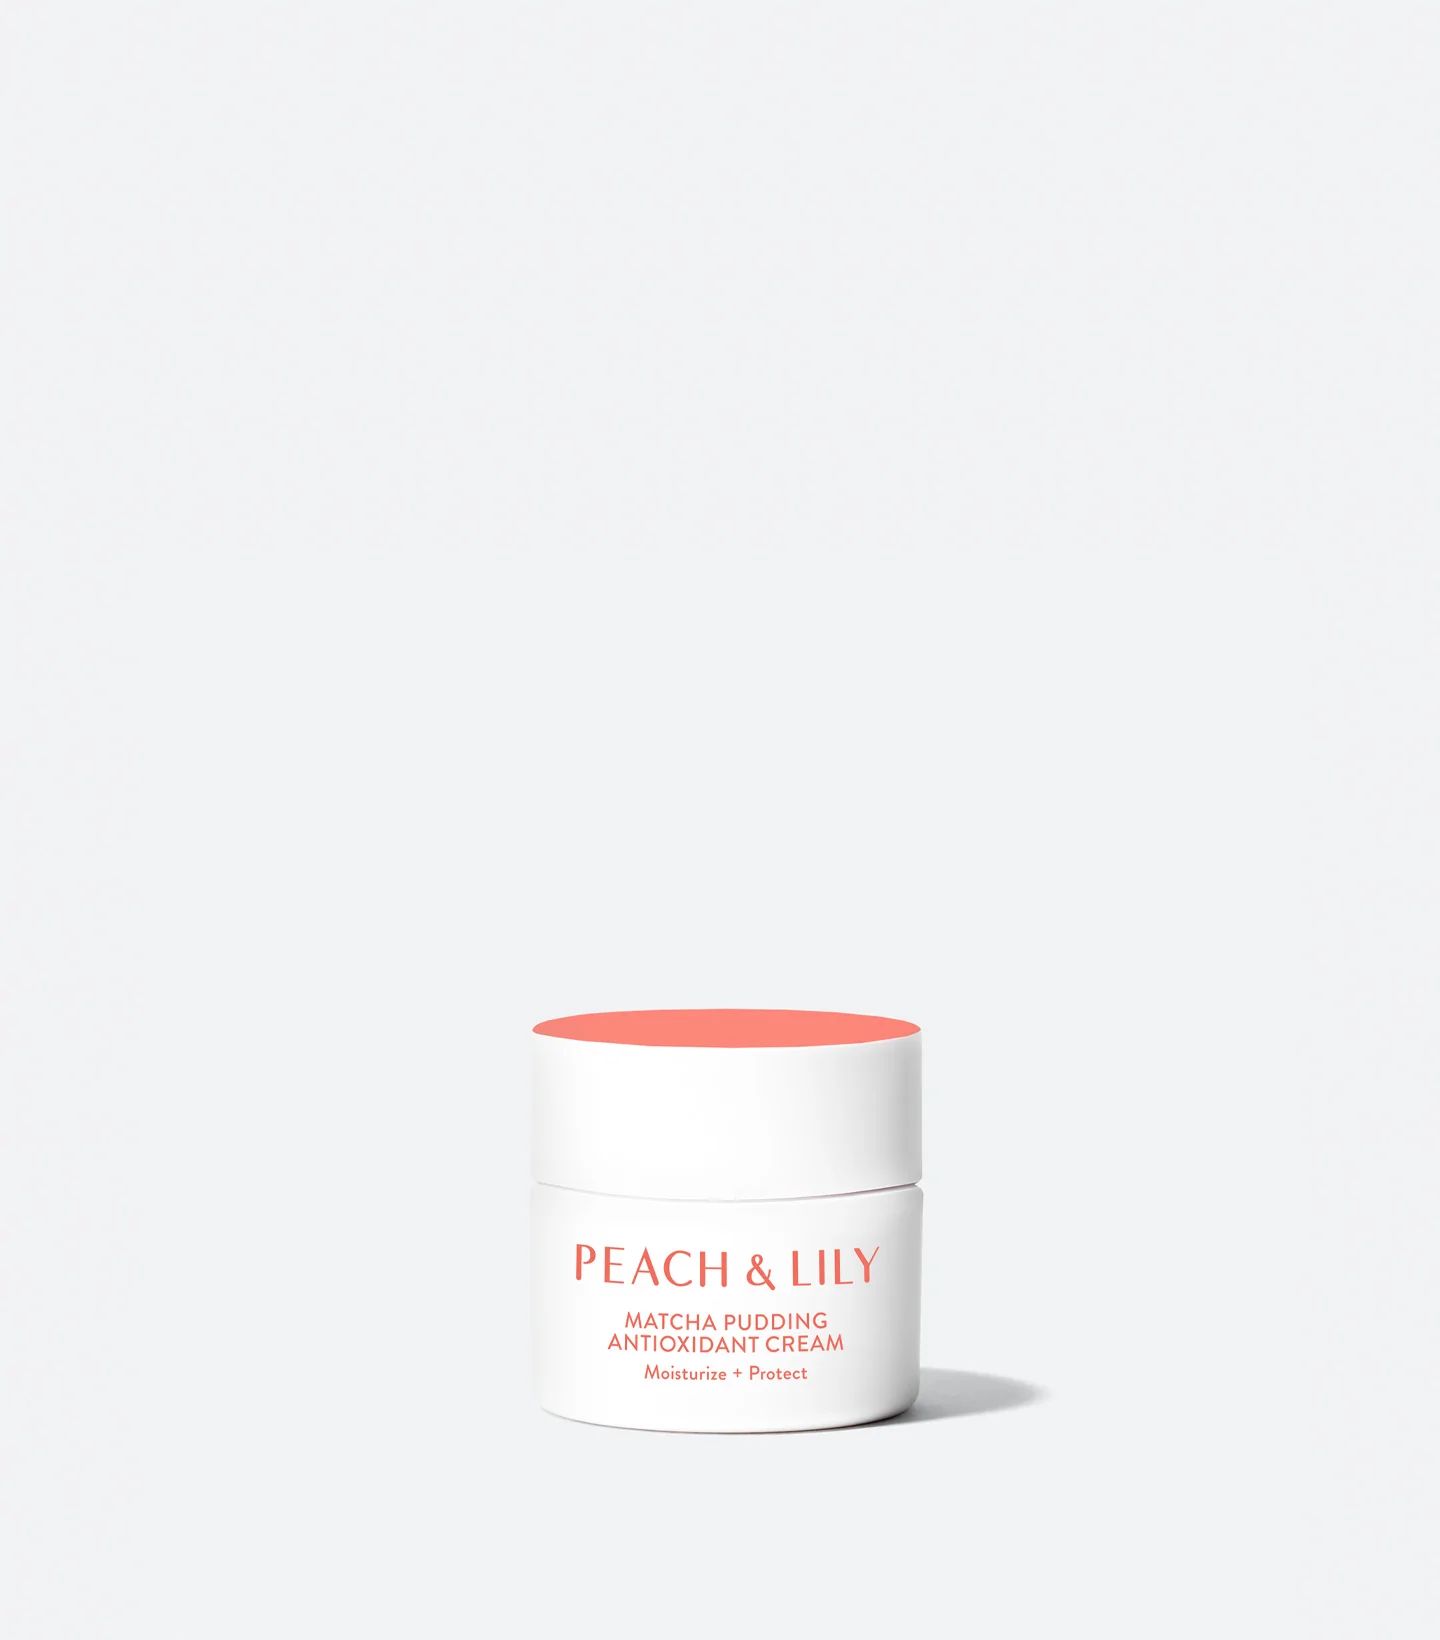 Matcha Pudding Antioxidant Cream | Peach and Lily, Inc.